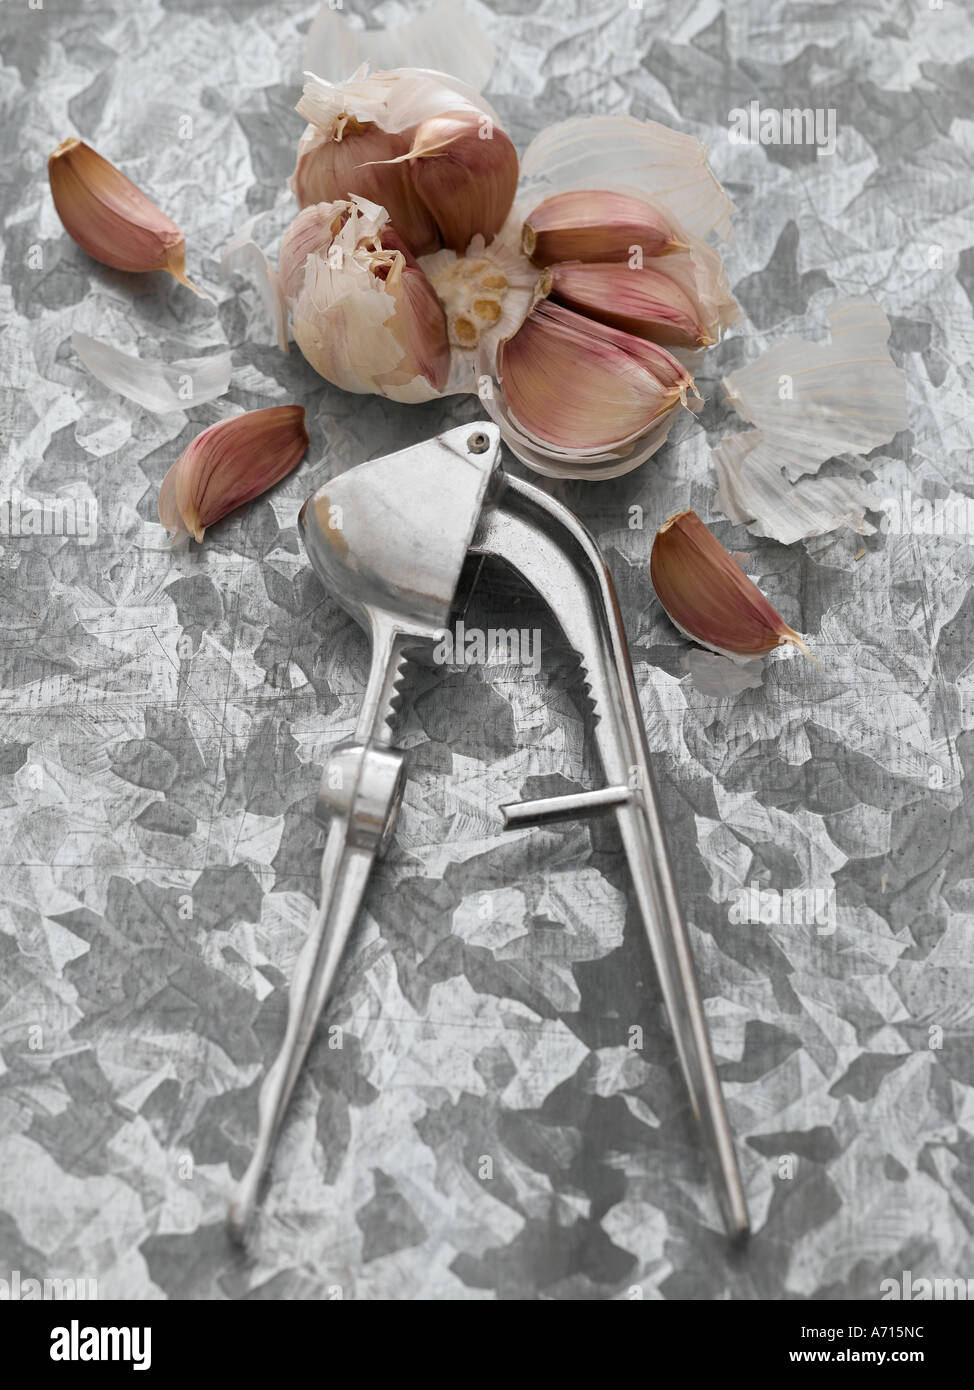 Garlic - high end Hasselblad 61mb digital image Stock Photo